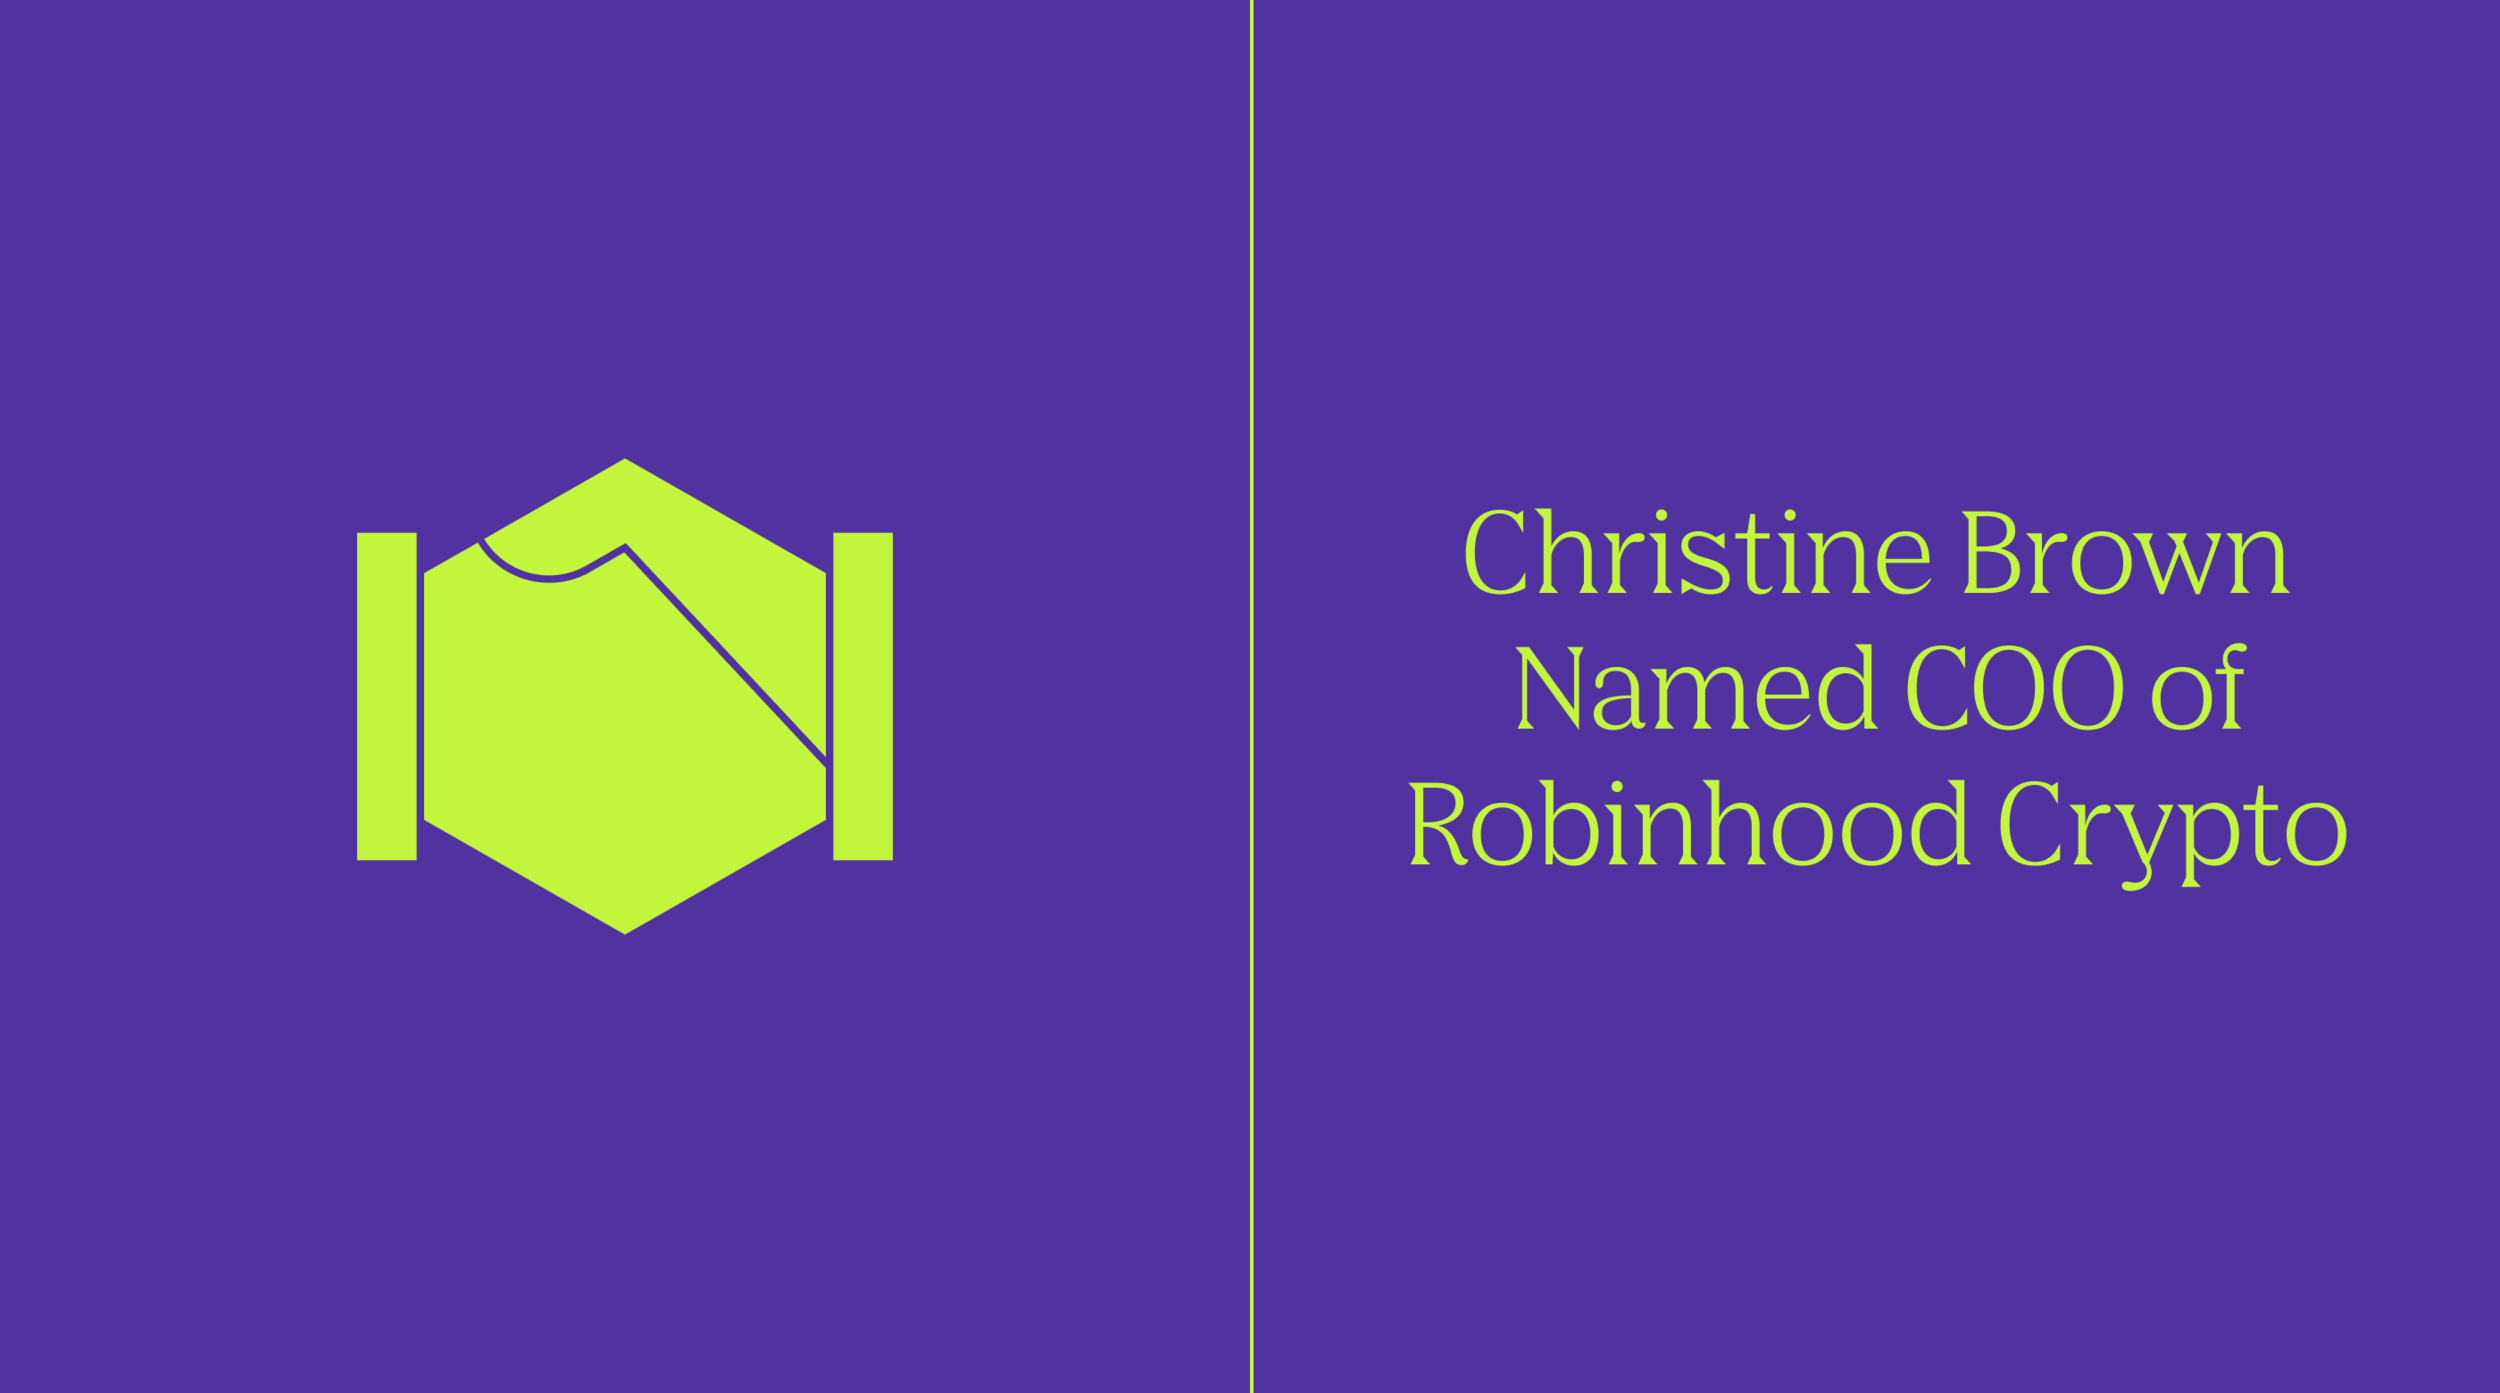 Christine Brown To Lead Robinhood Crypto as COO